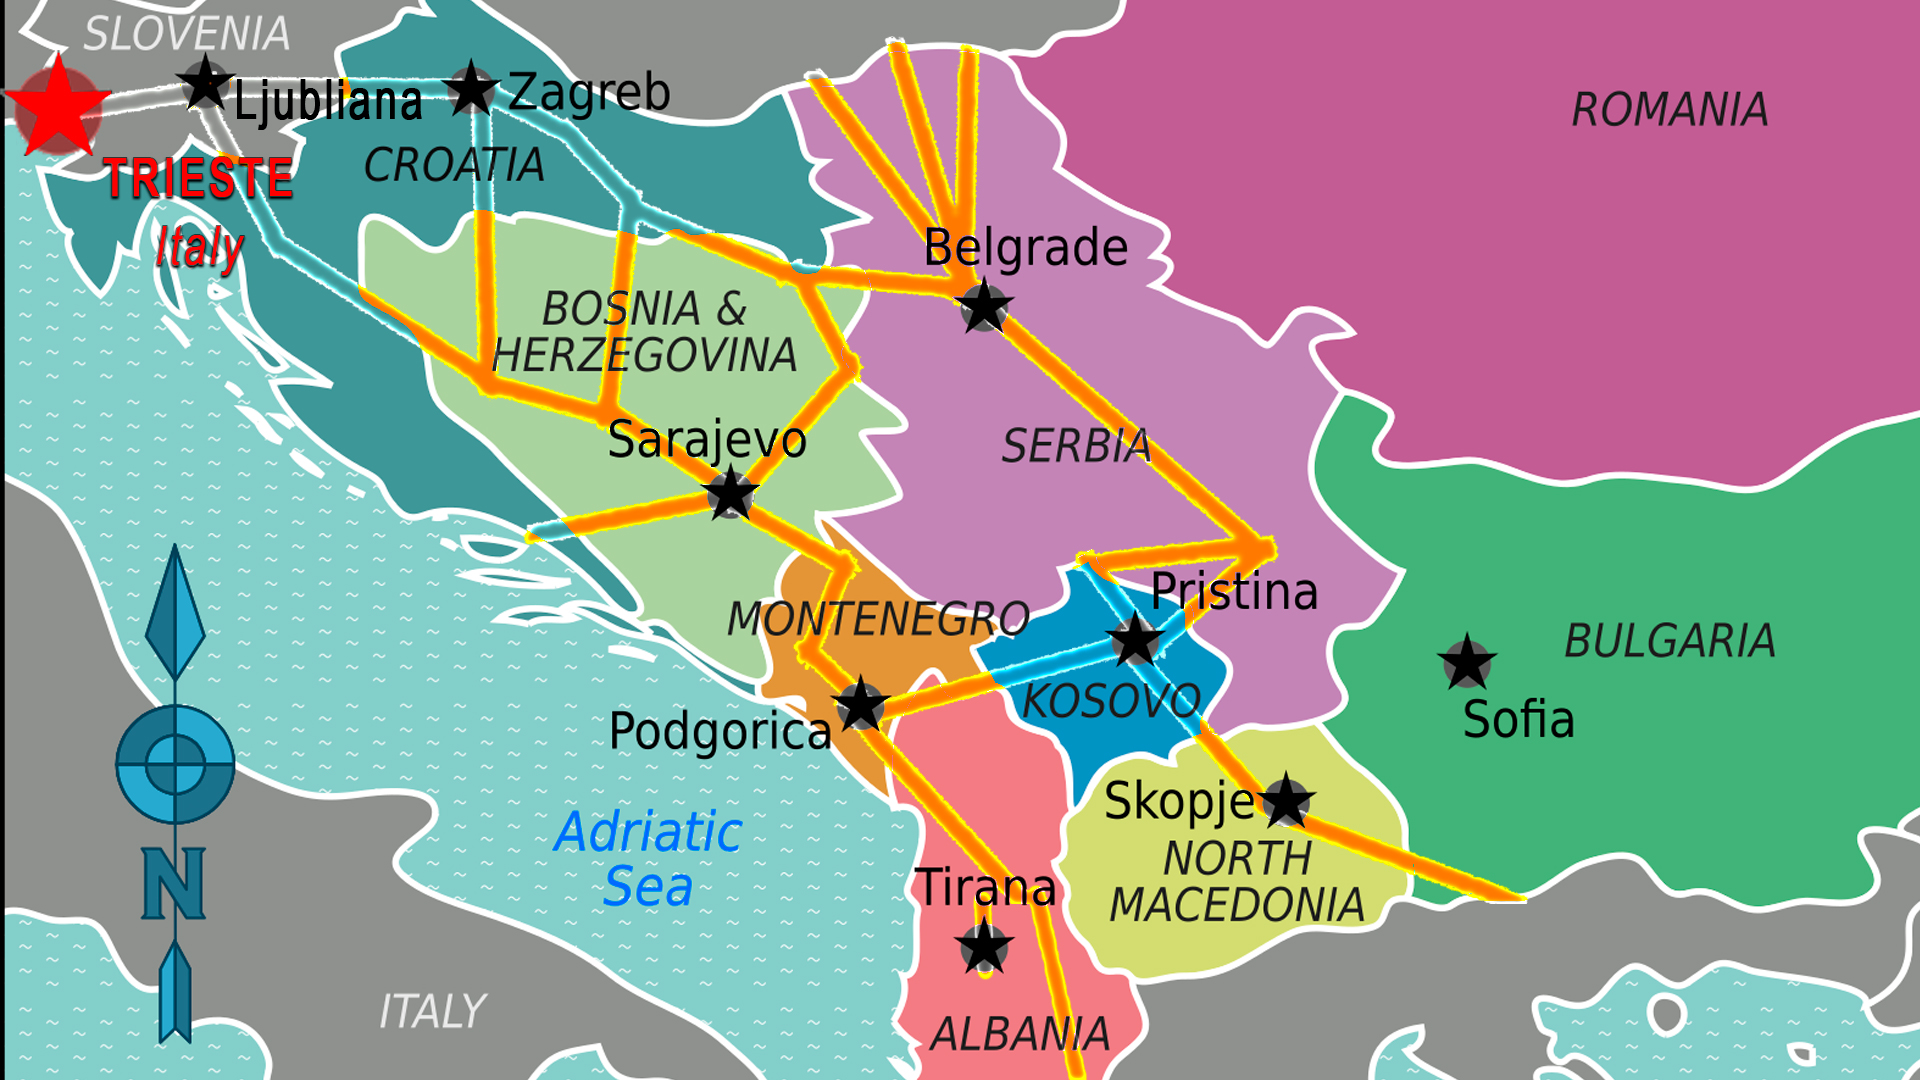 A map of the Balkan route, which takes place between the countries of Bulgaria, Macedonia, Kosovo, Serbia, Albania, Montenegro, Bosnia & Herzegovina and Croatia.